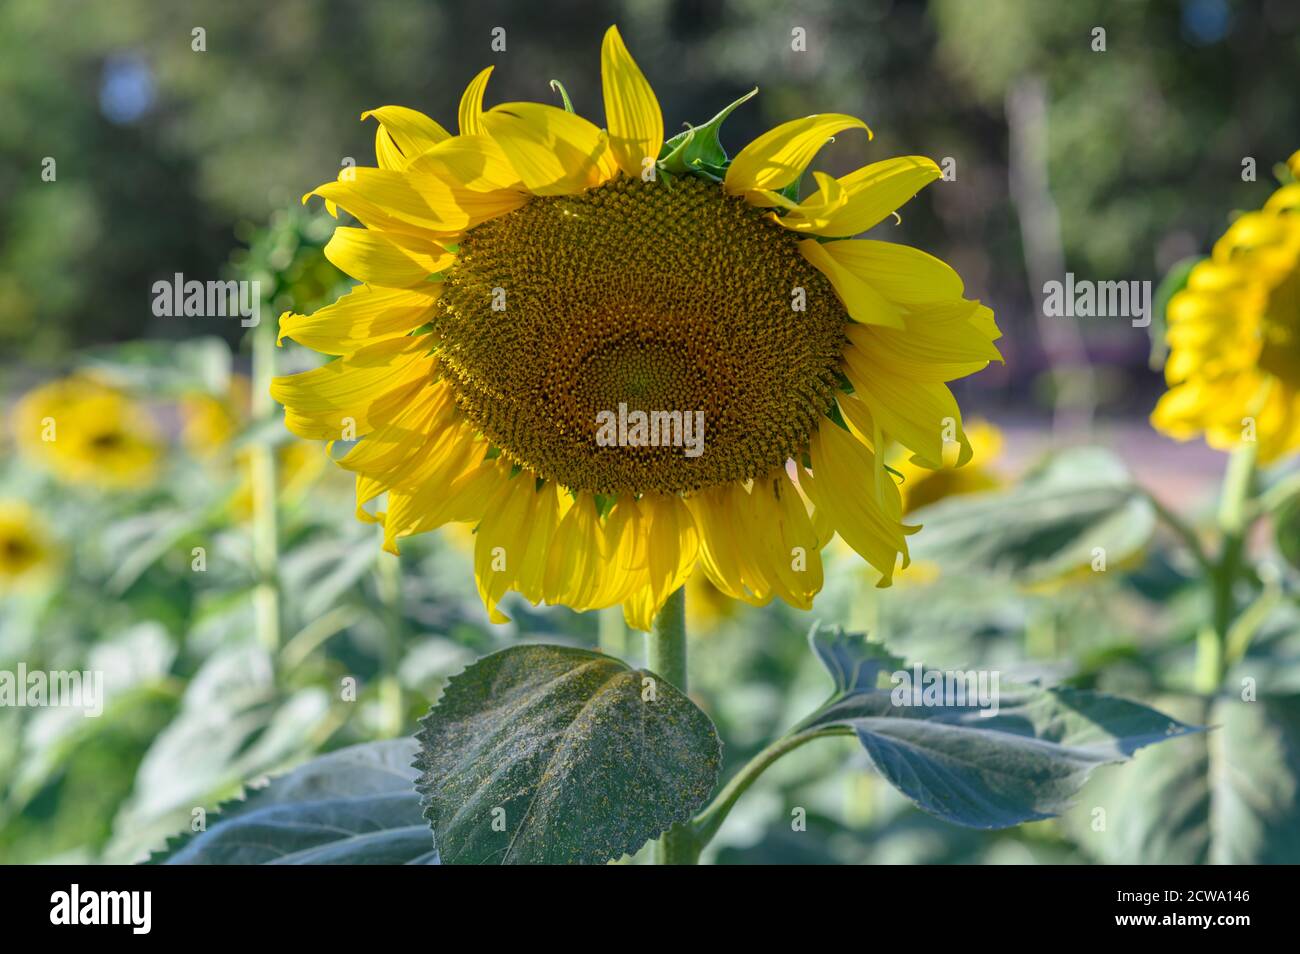 Sunflower field in Thailand.Sunflower blooming. Stock Photo